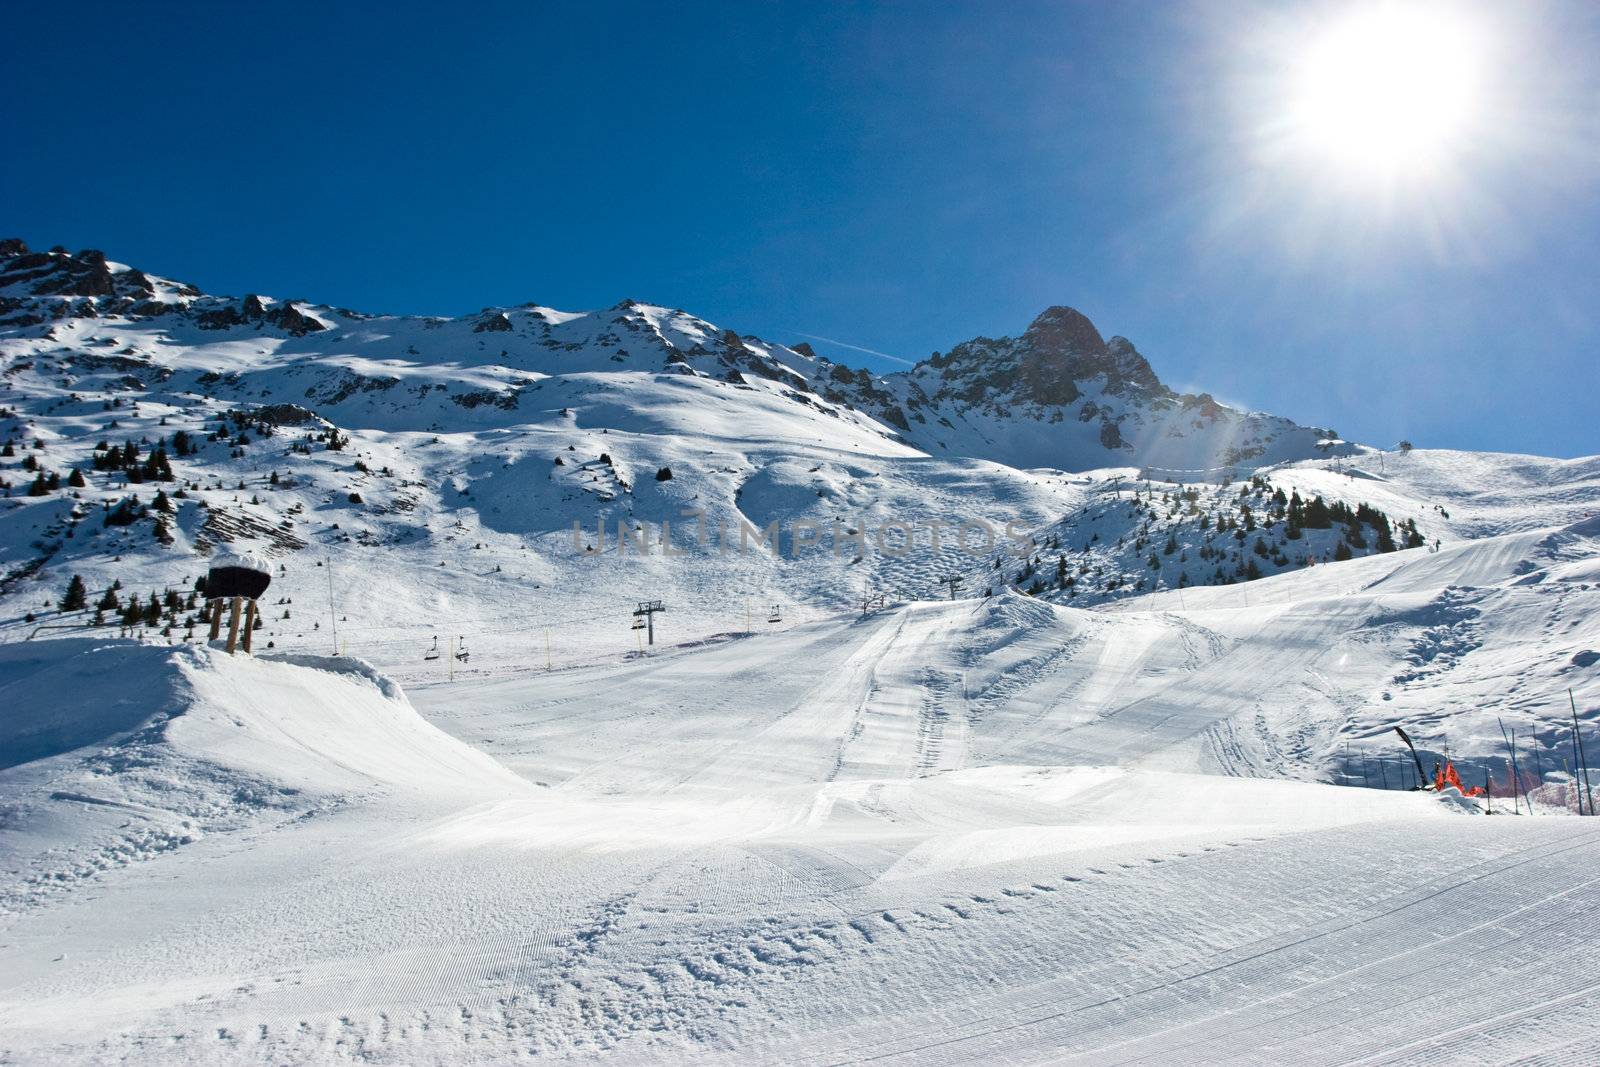 Empty ski slope by naumoid